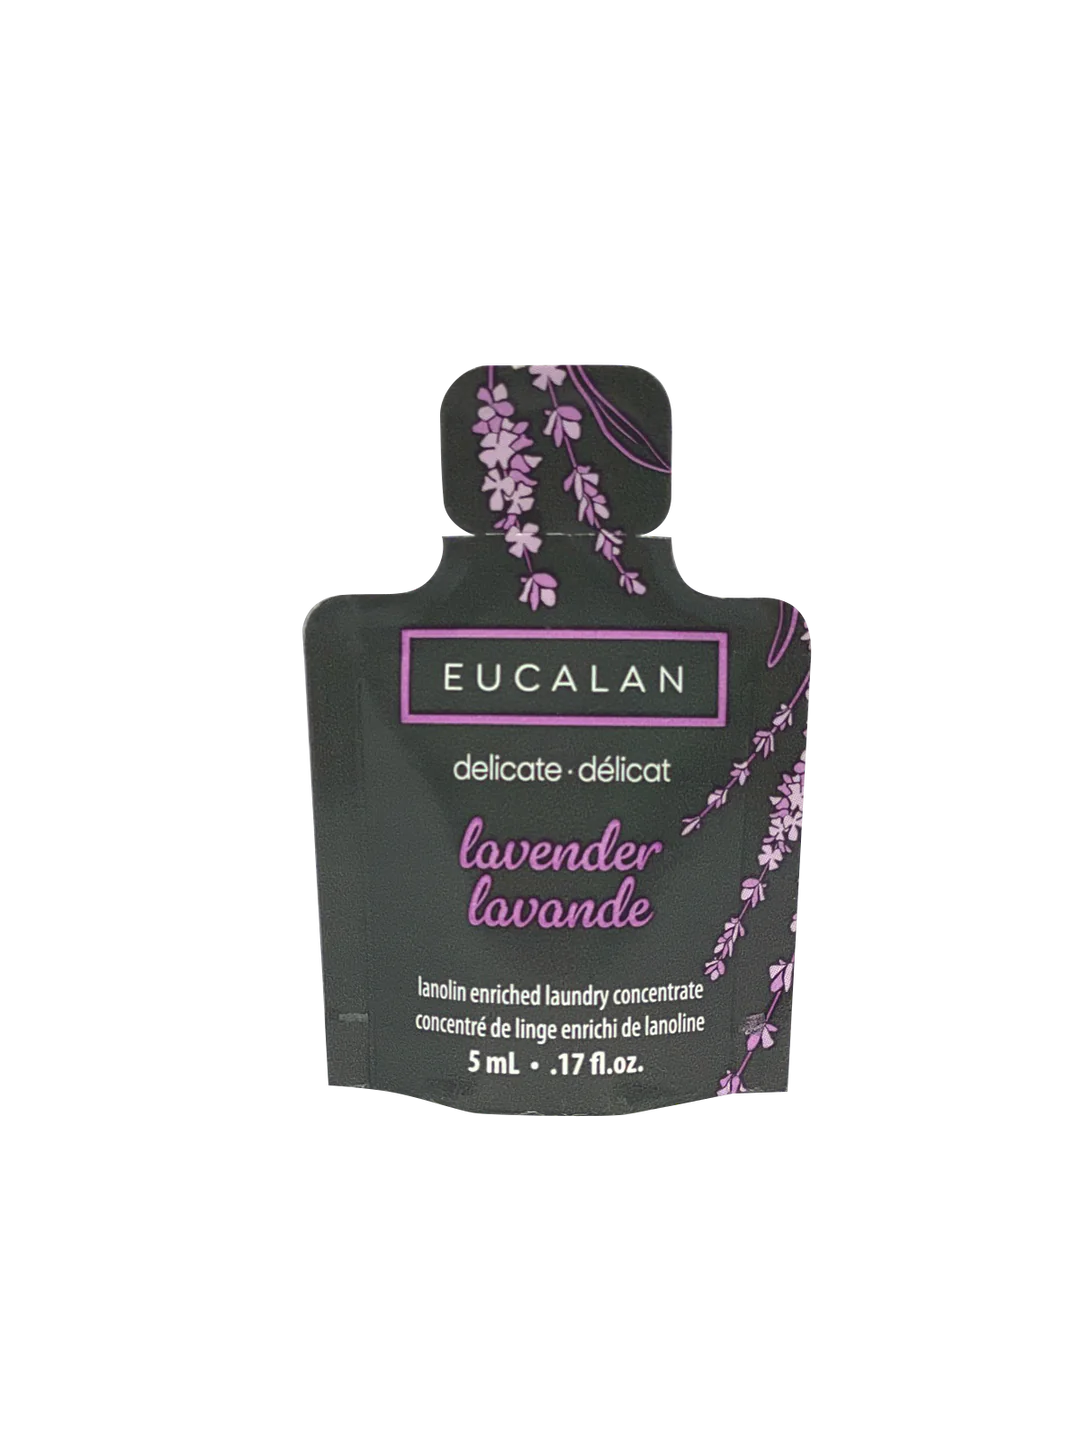 Eucalan - detergent delicat cu lavandă - 5 ml